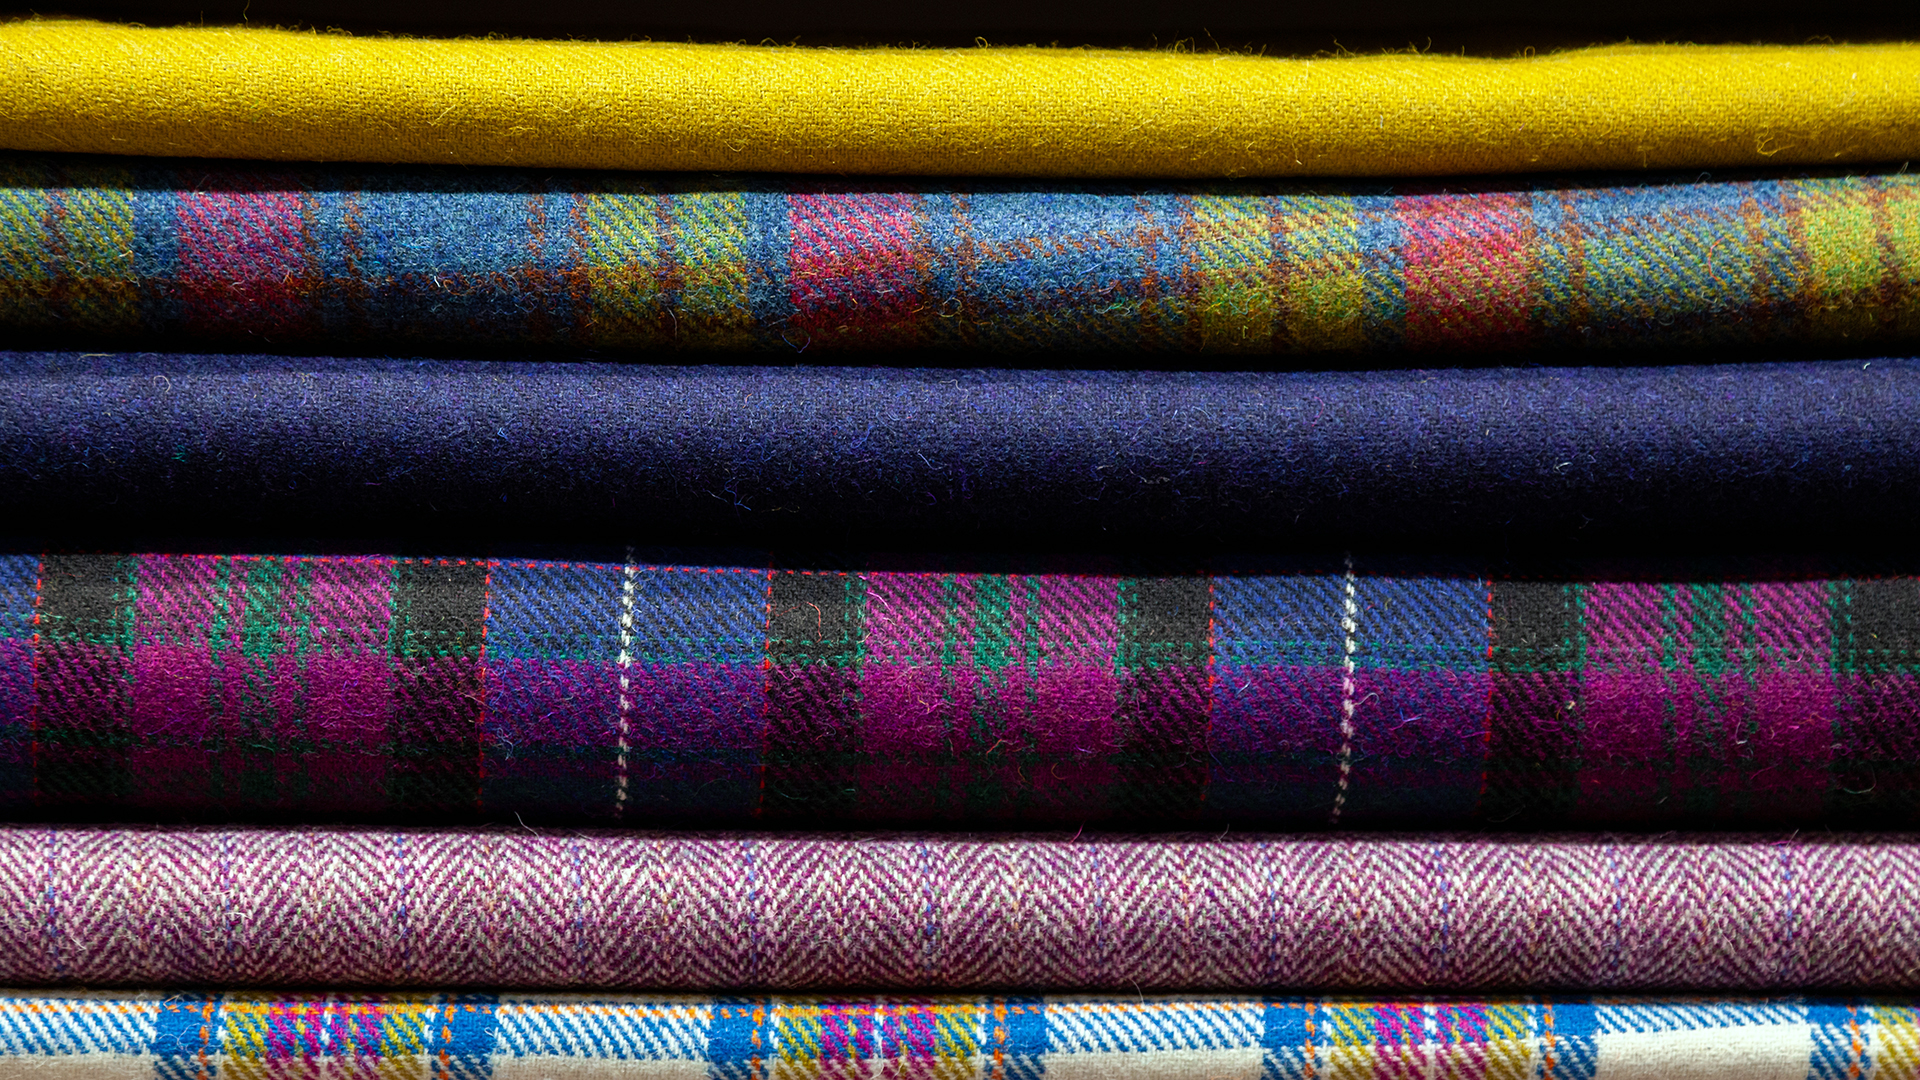 Harris Tweed Hebrides fabric layers